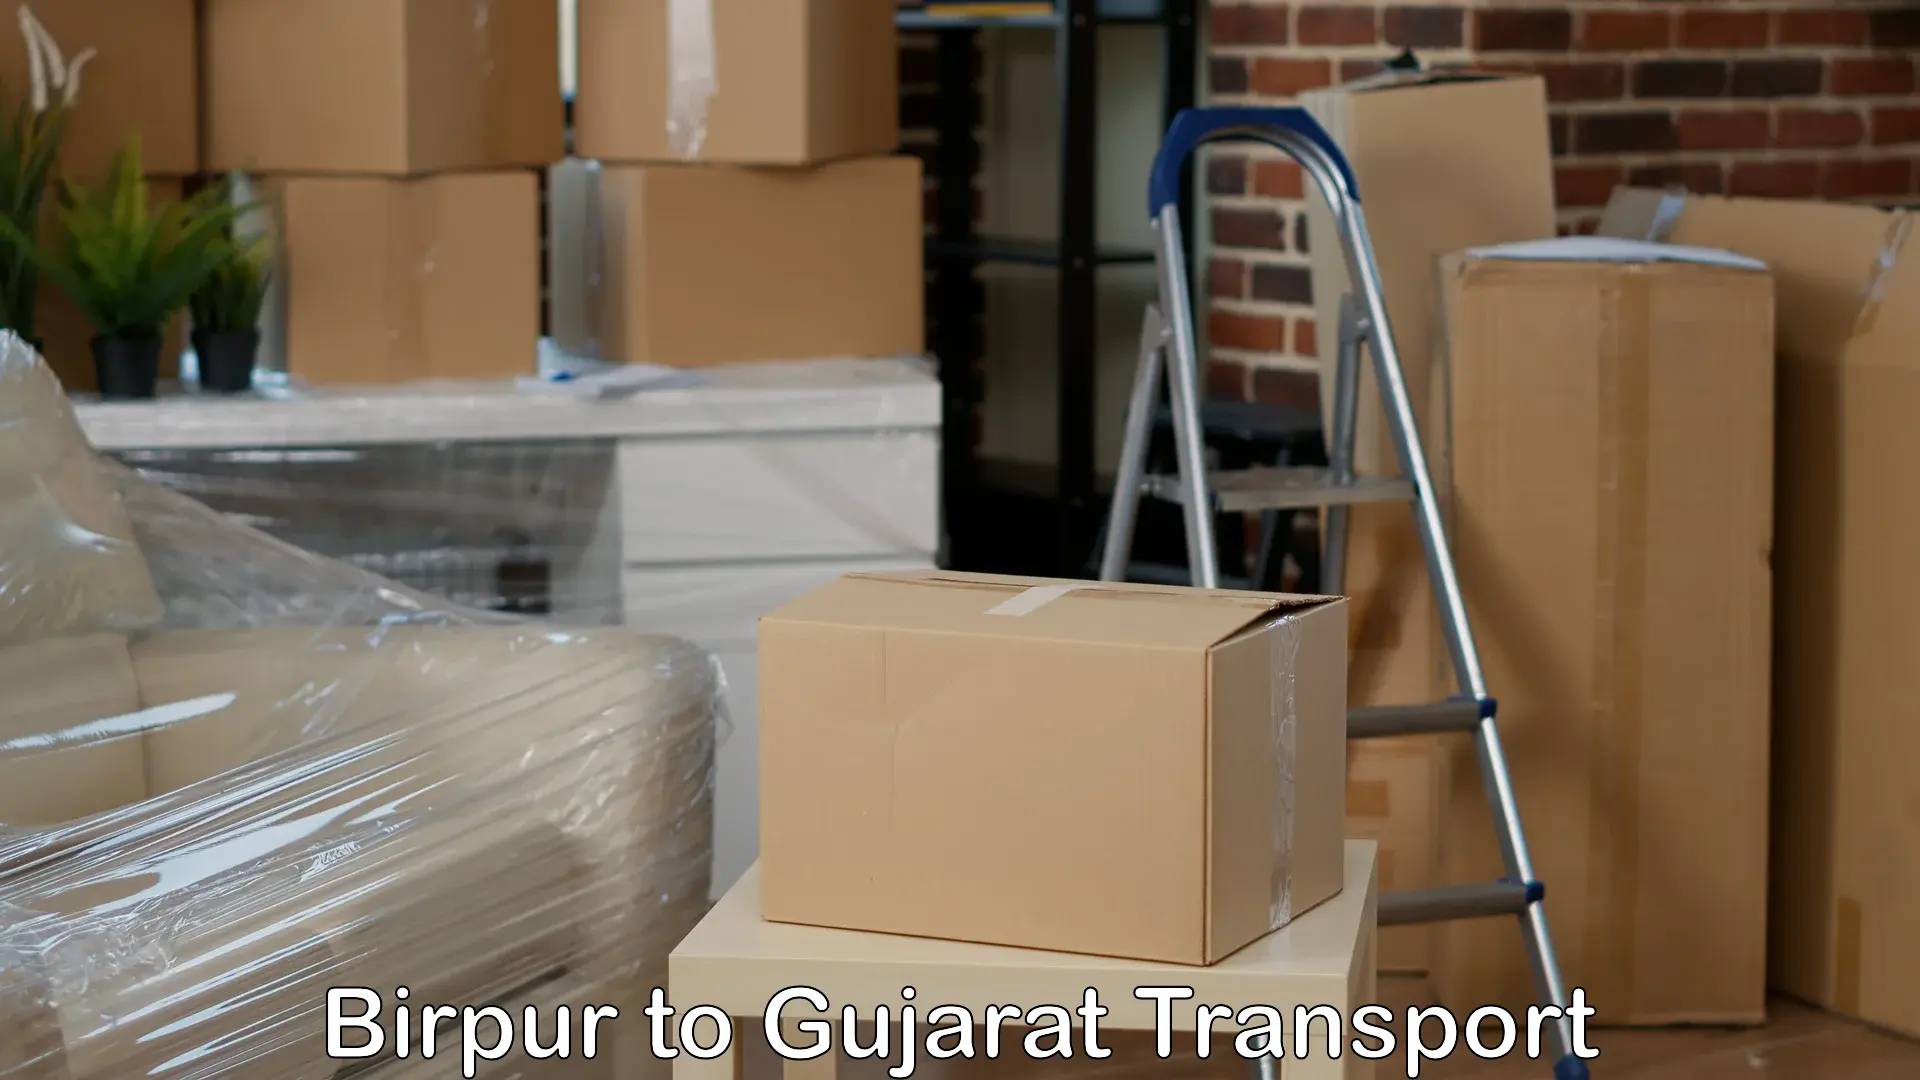 Truck transport companies in India Birpur to Surat